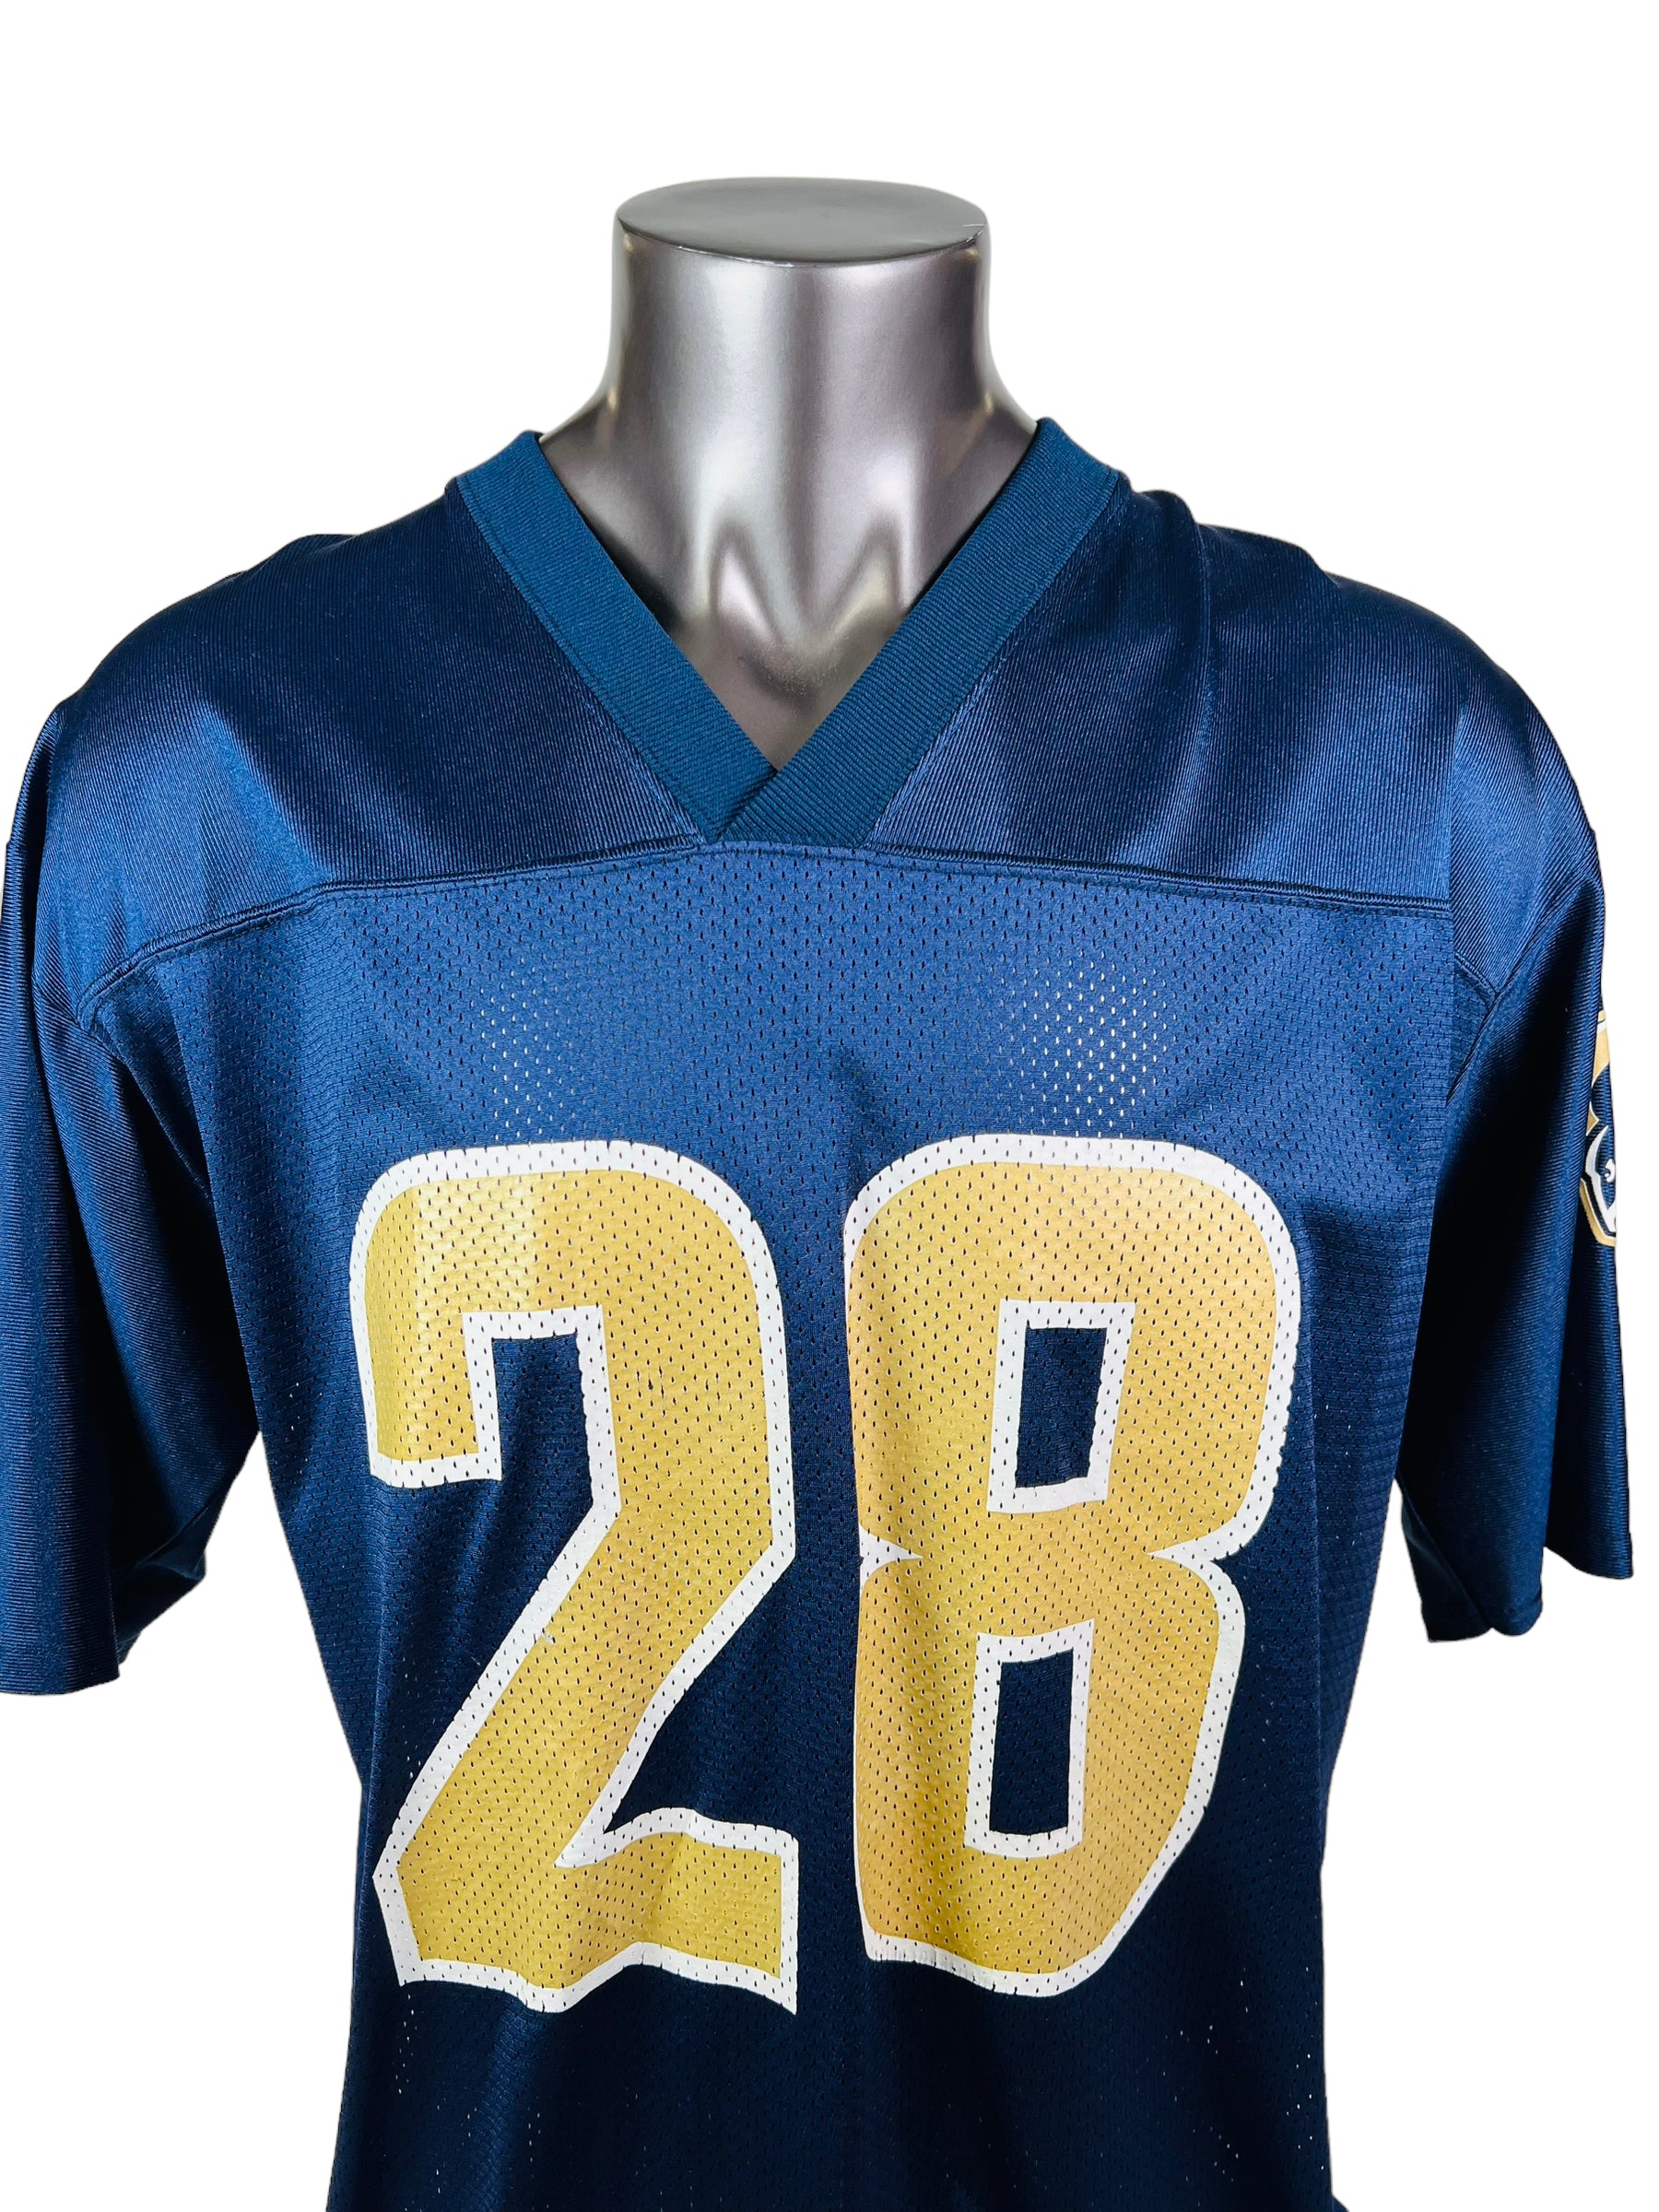 Vintage Marshall Faulk St. Louis Rams Gold Reebok Jersey L NFL